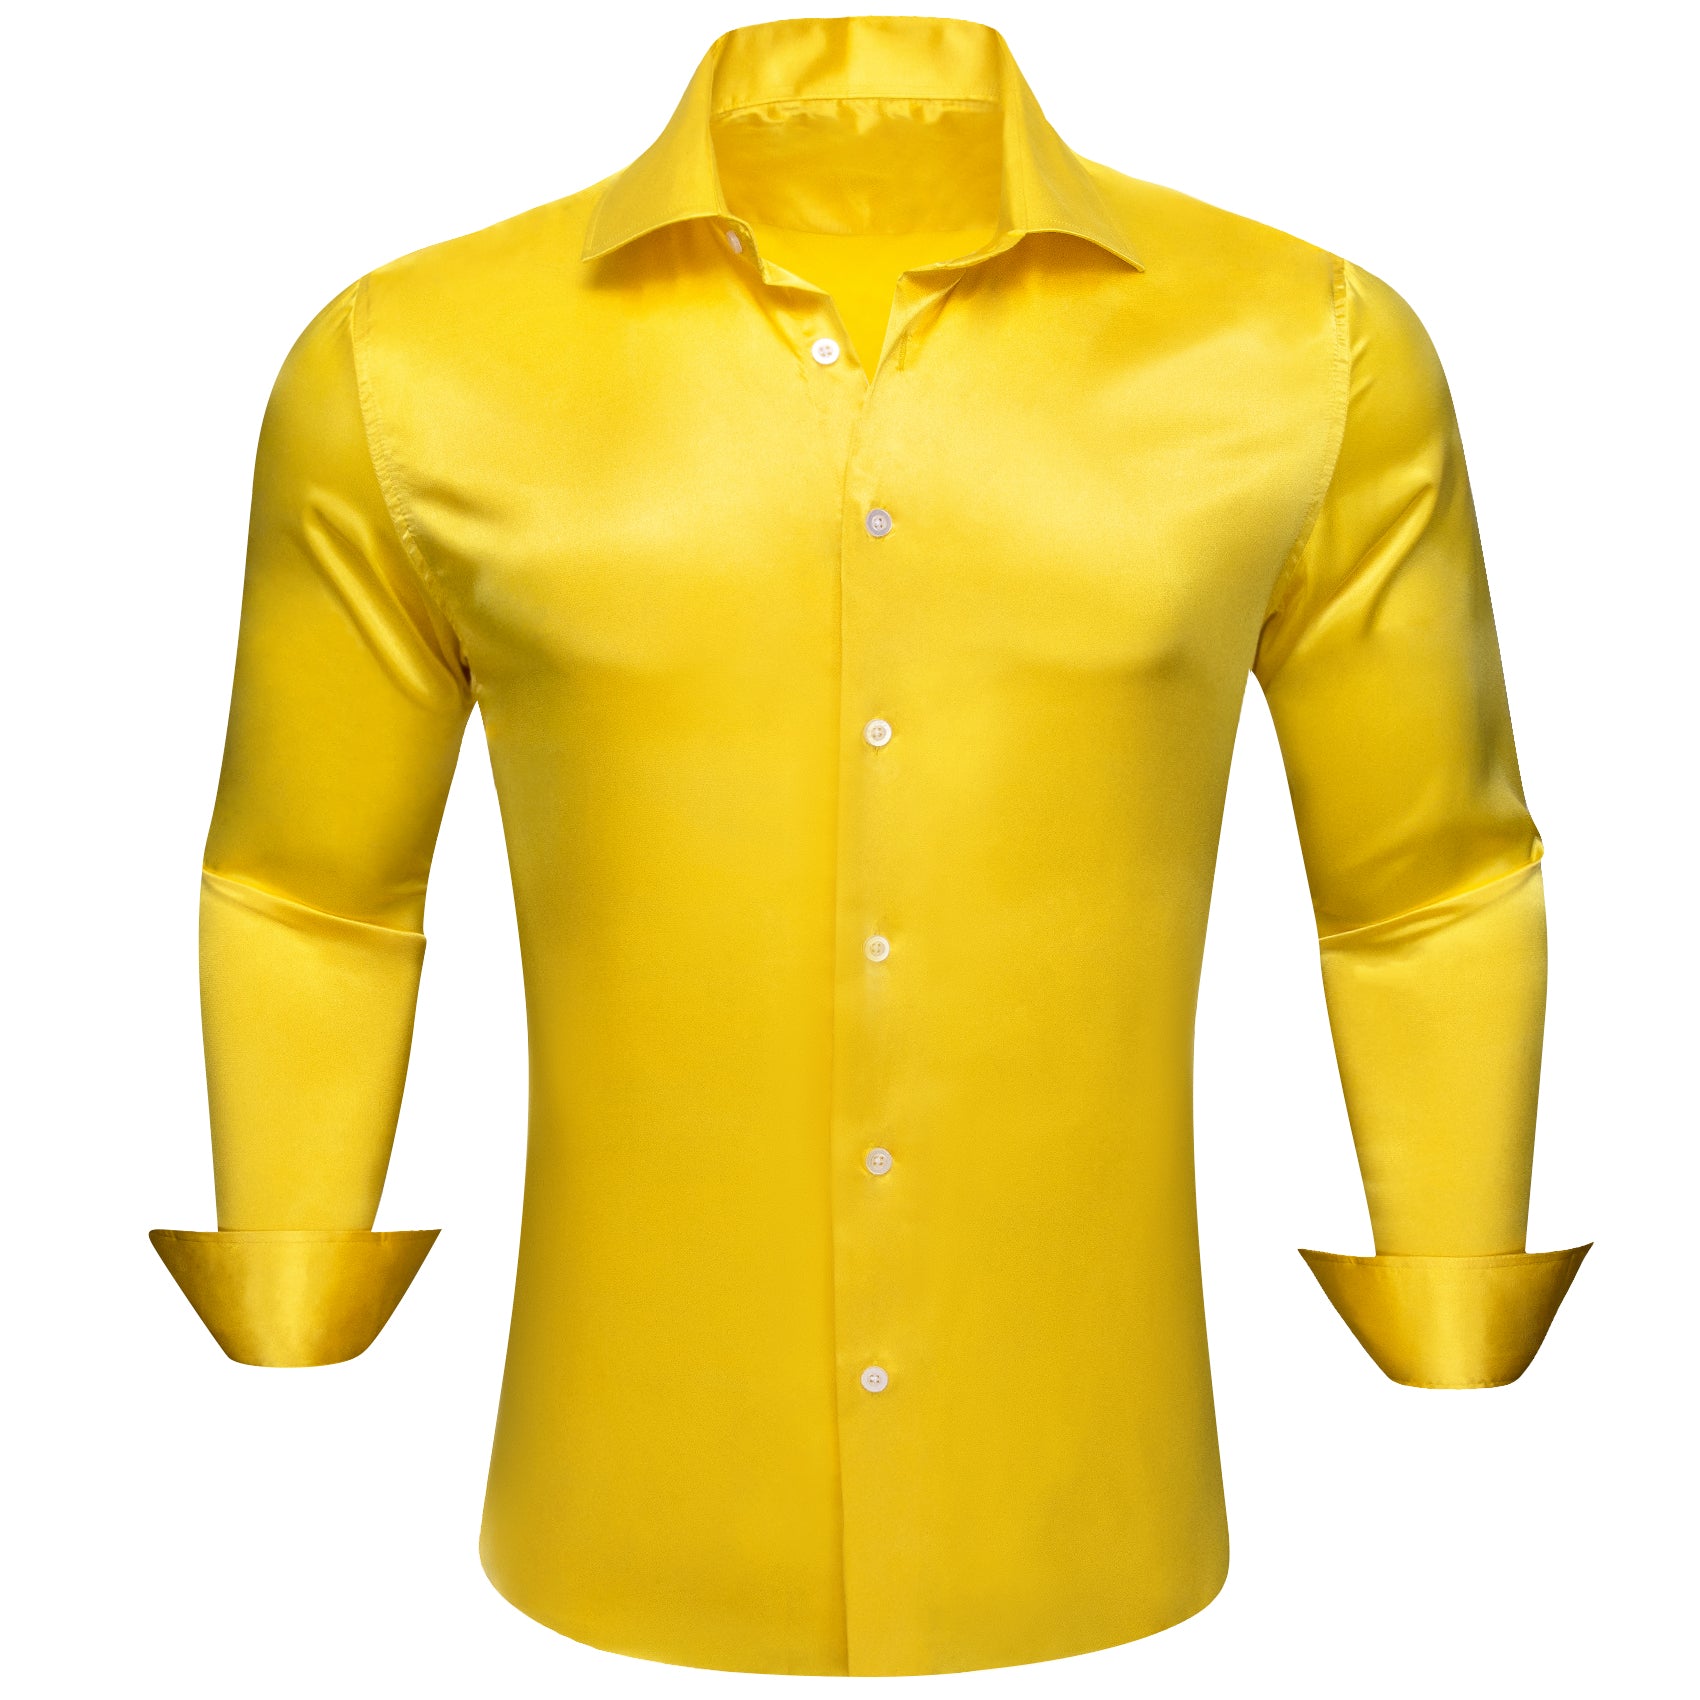 Barry.wang Bright Yellow Solid Silk Men's Long Sleeve Shirt